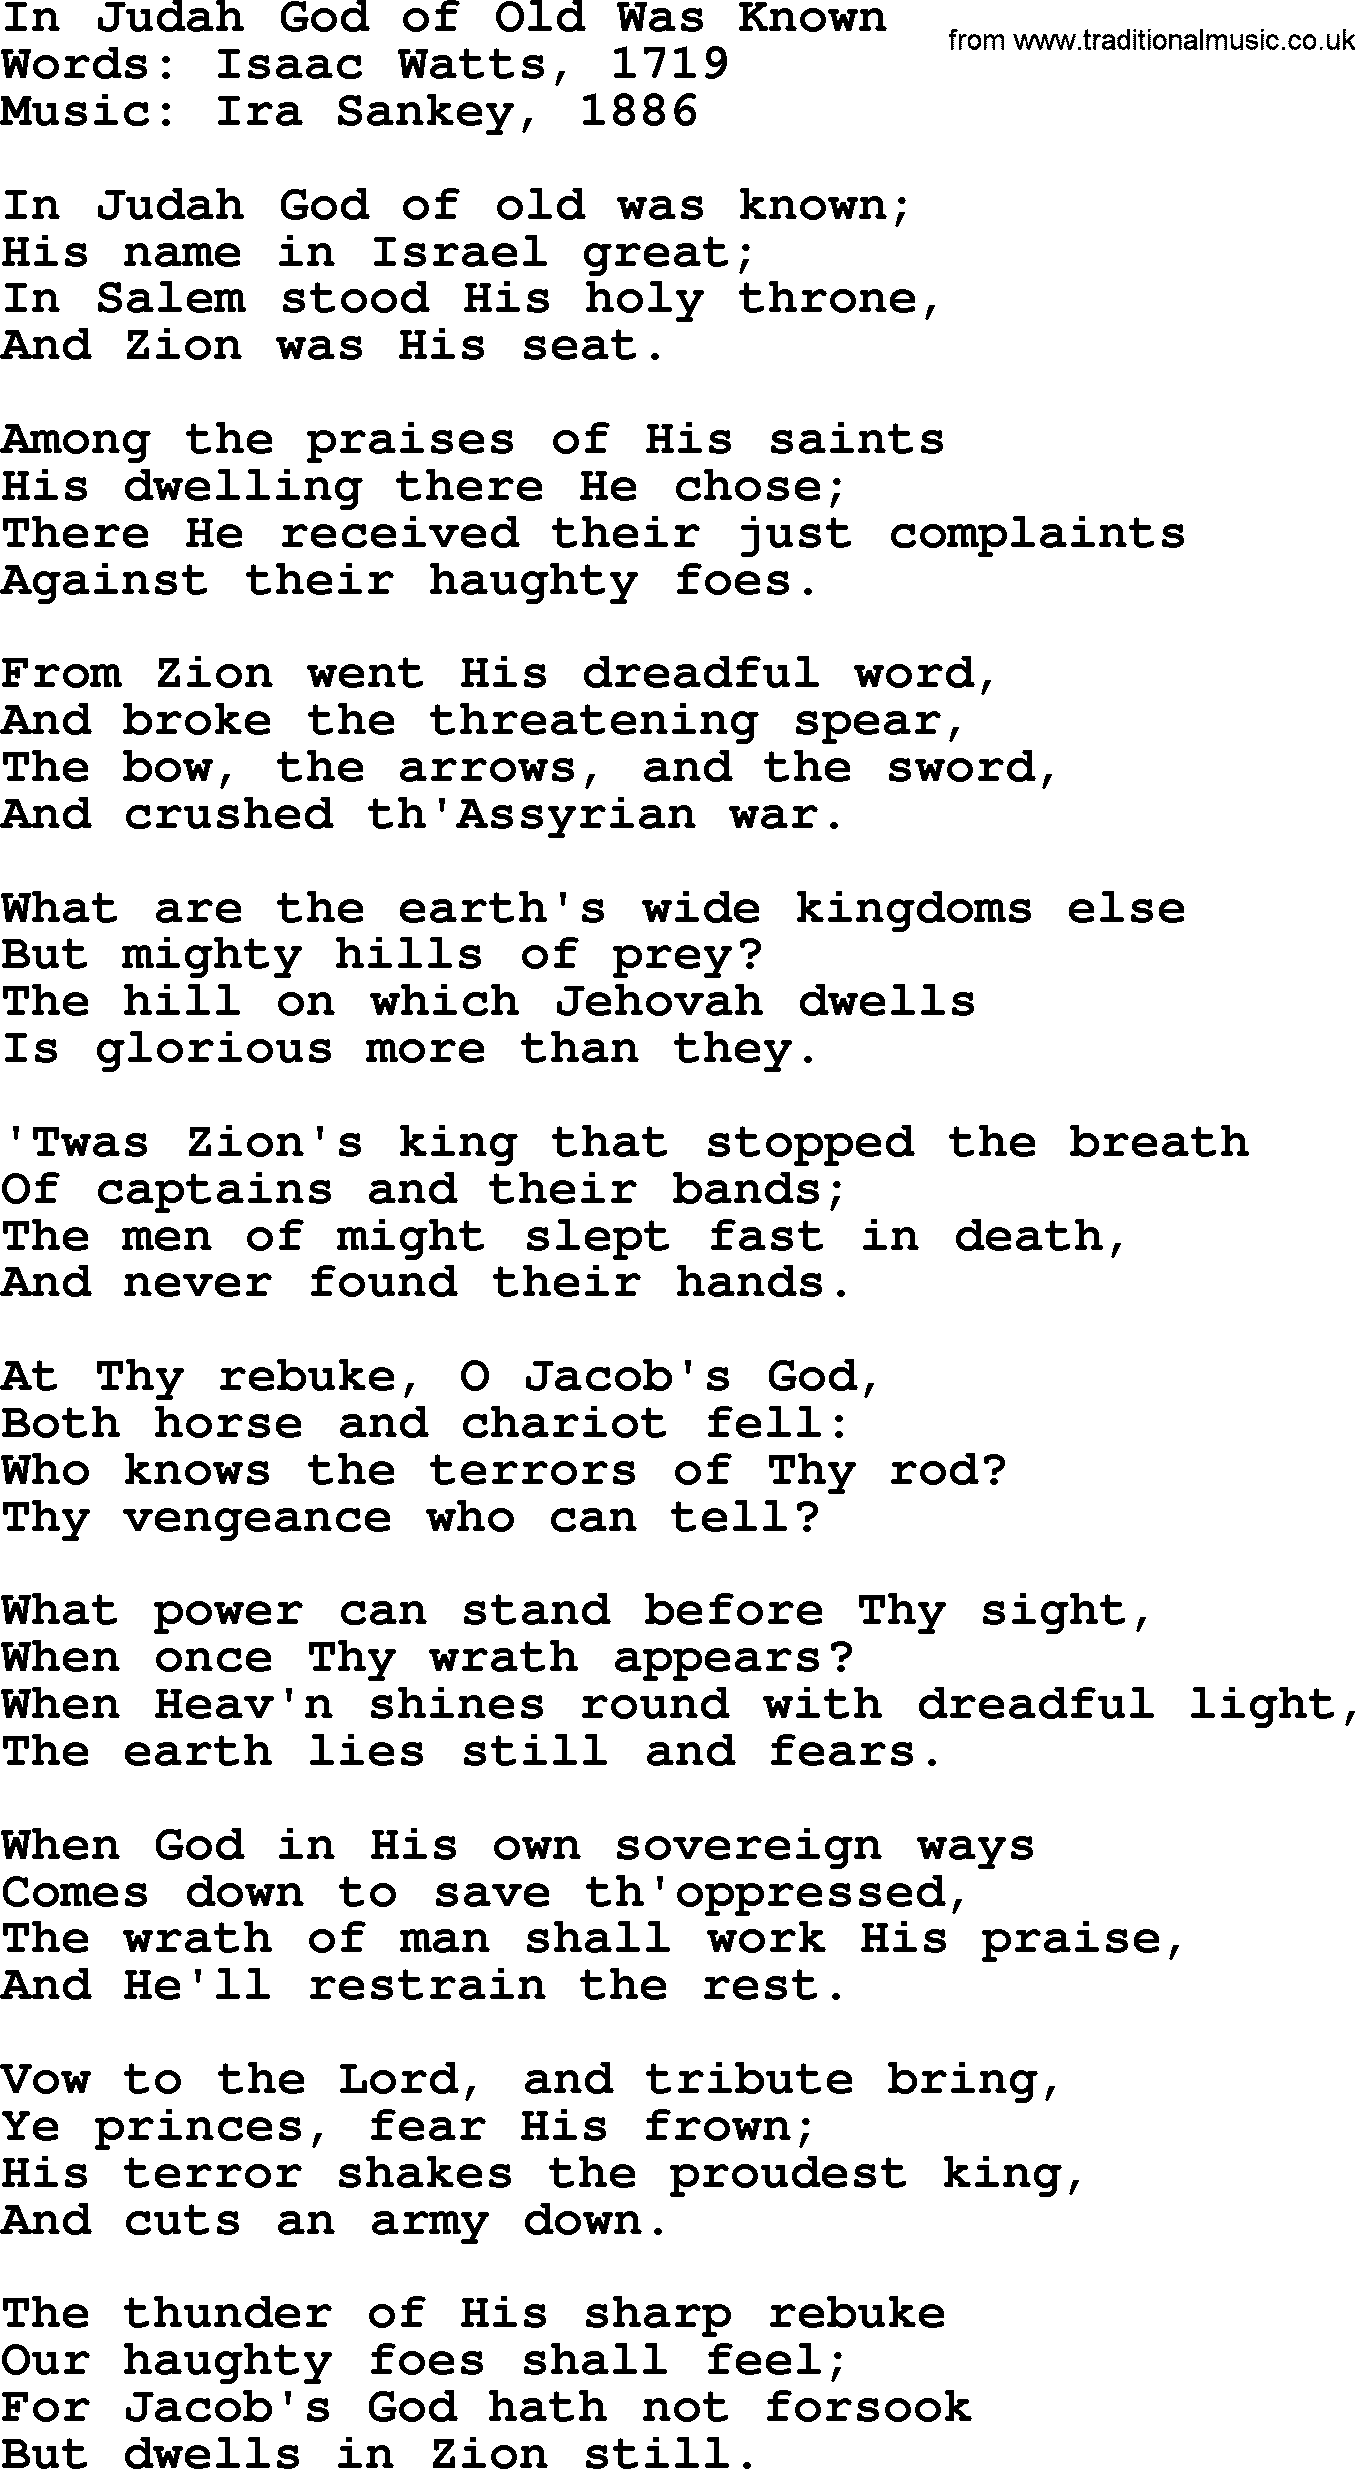 Ira Sankey hymn: In Judah God of Old Was Known-Ira Sankey, lyrics